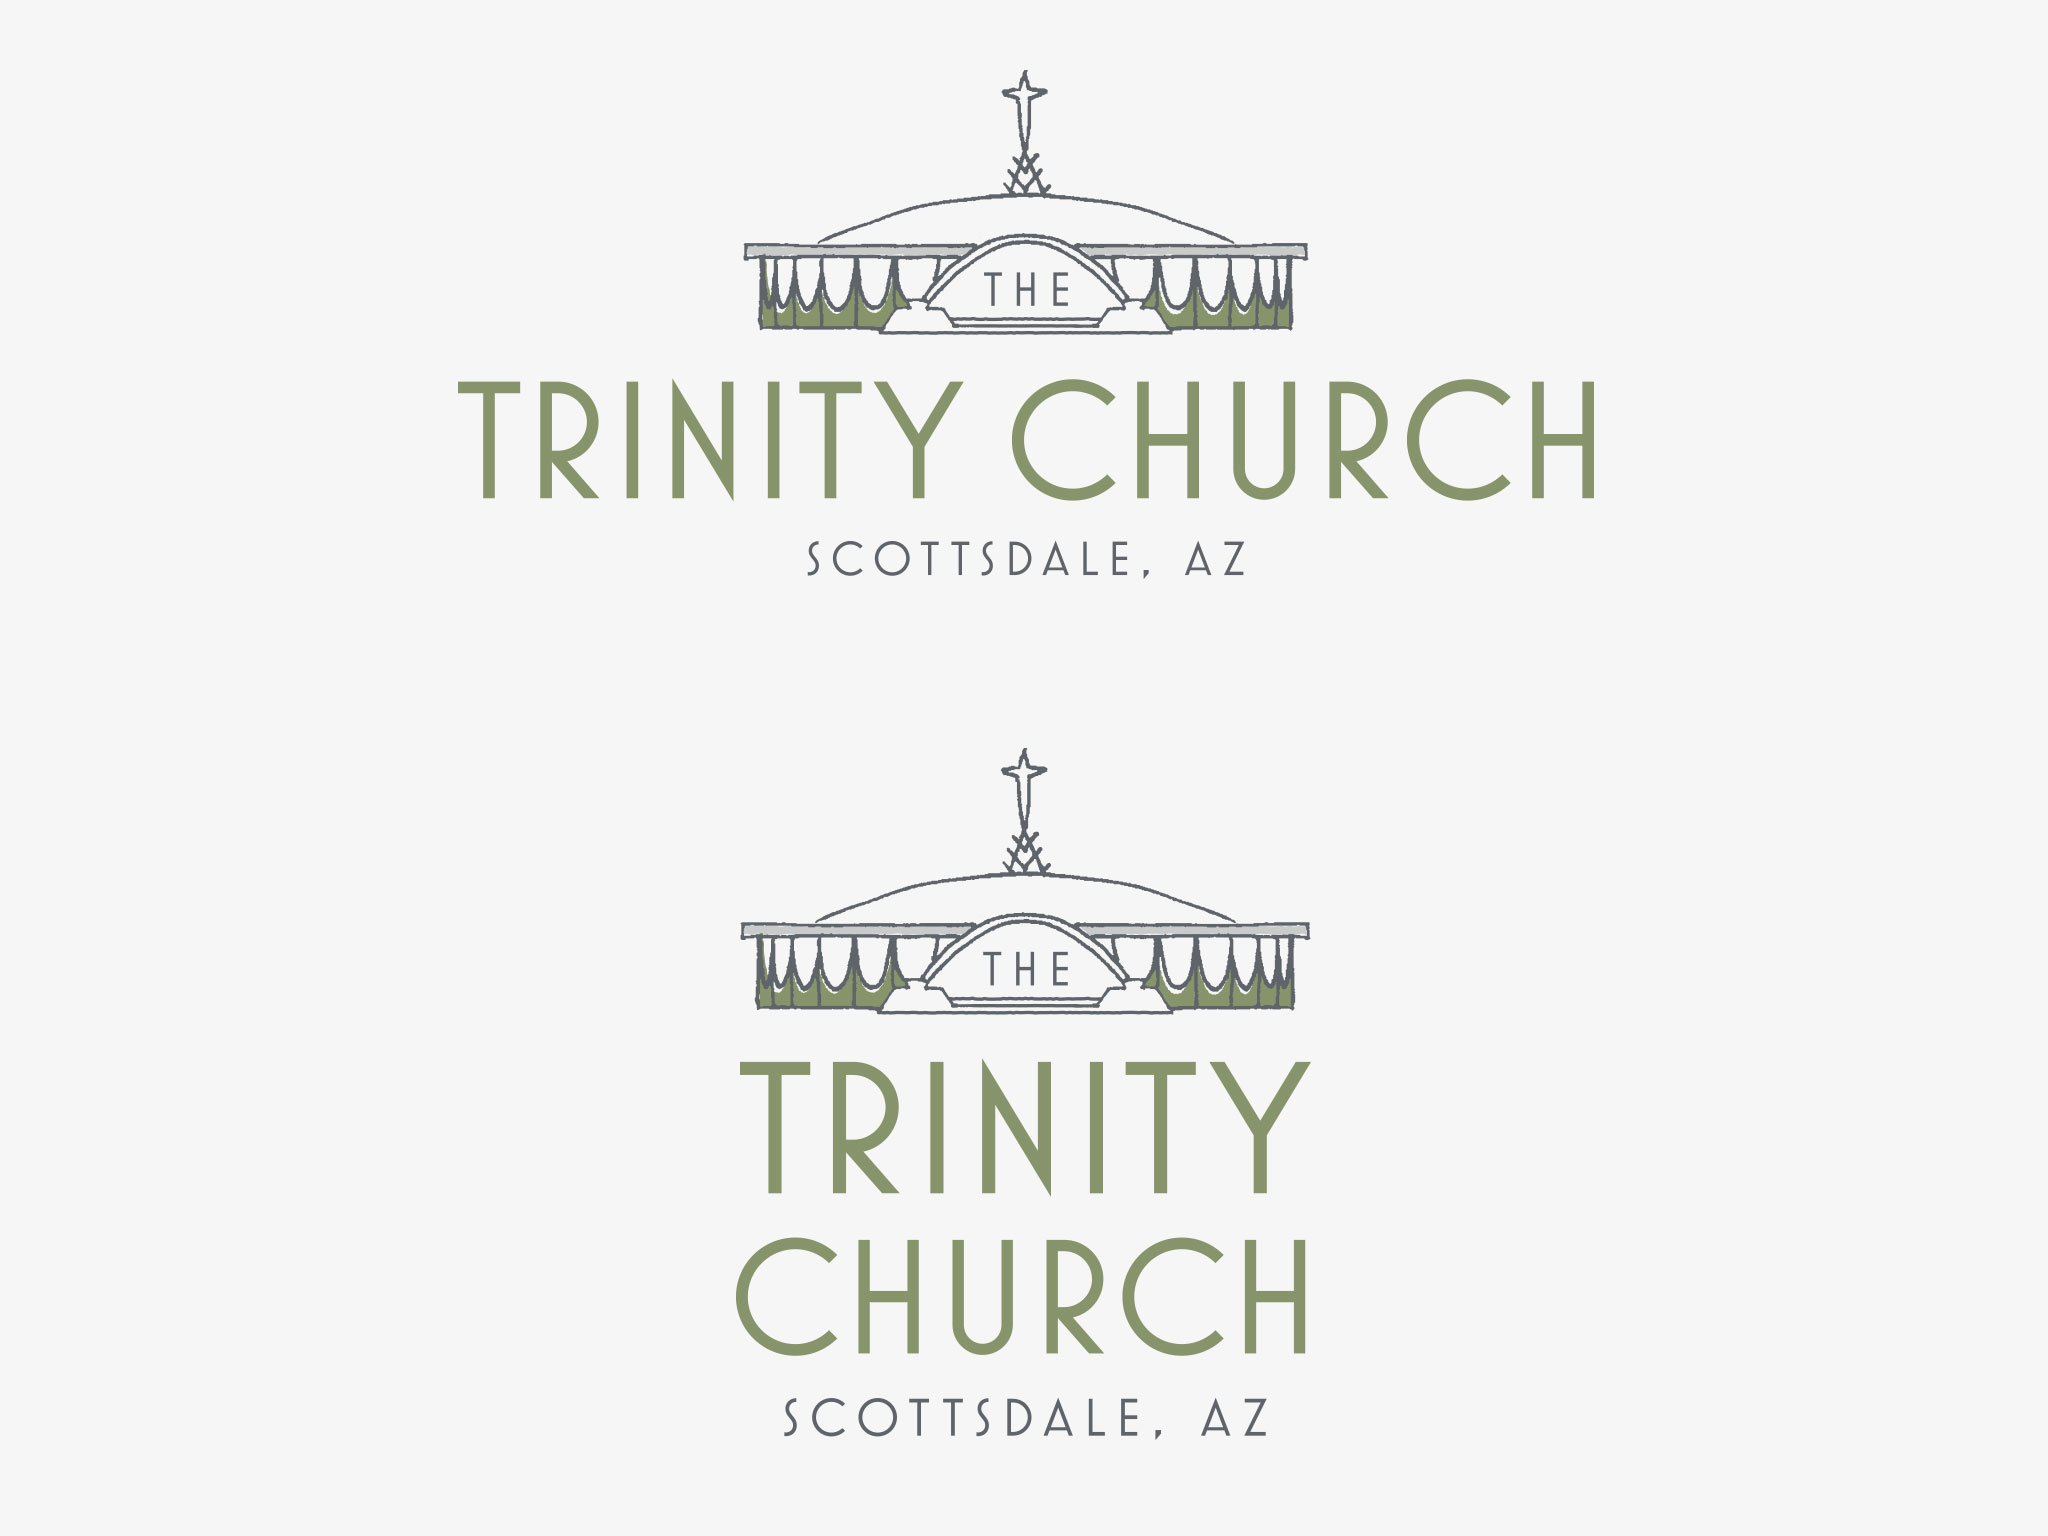 The Trinity Church | Redman Creative LLC